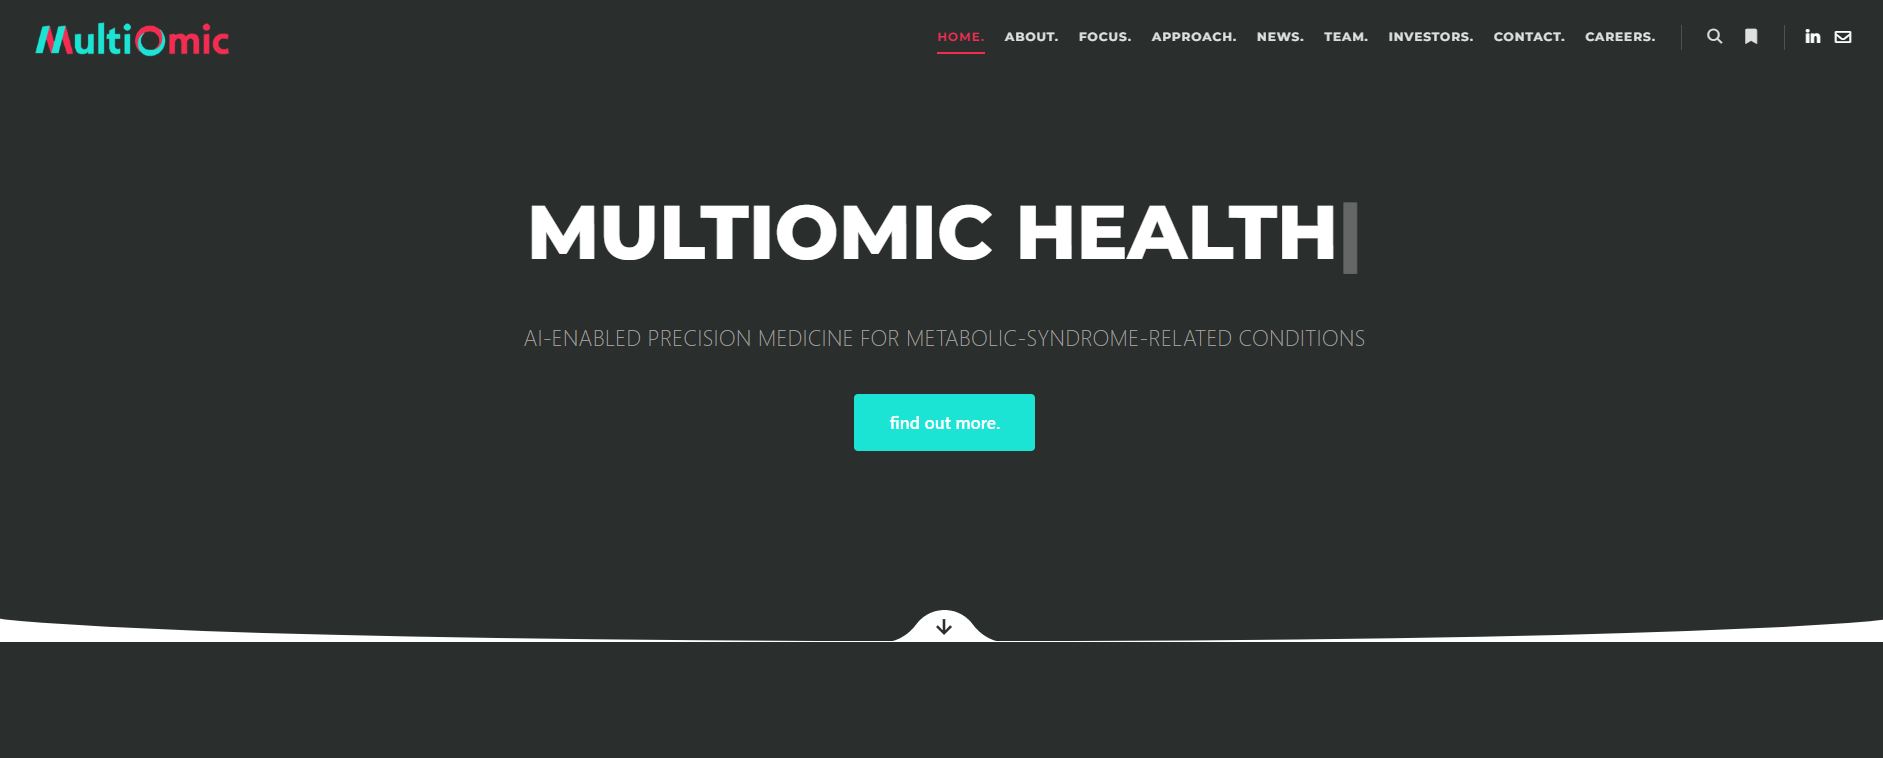 Multiomic Health, a UK-based biotech startup, has raised $6.2M in seed funding